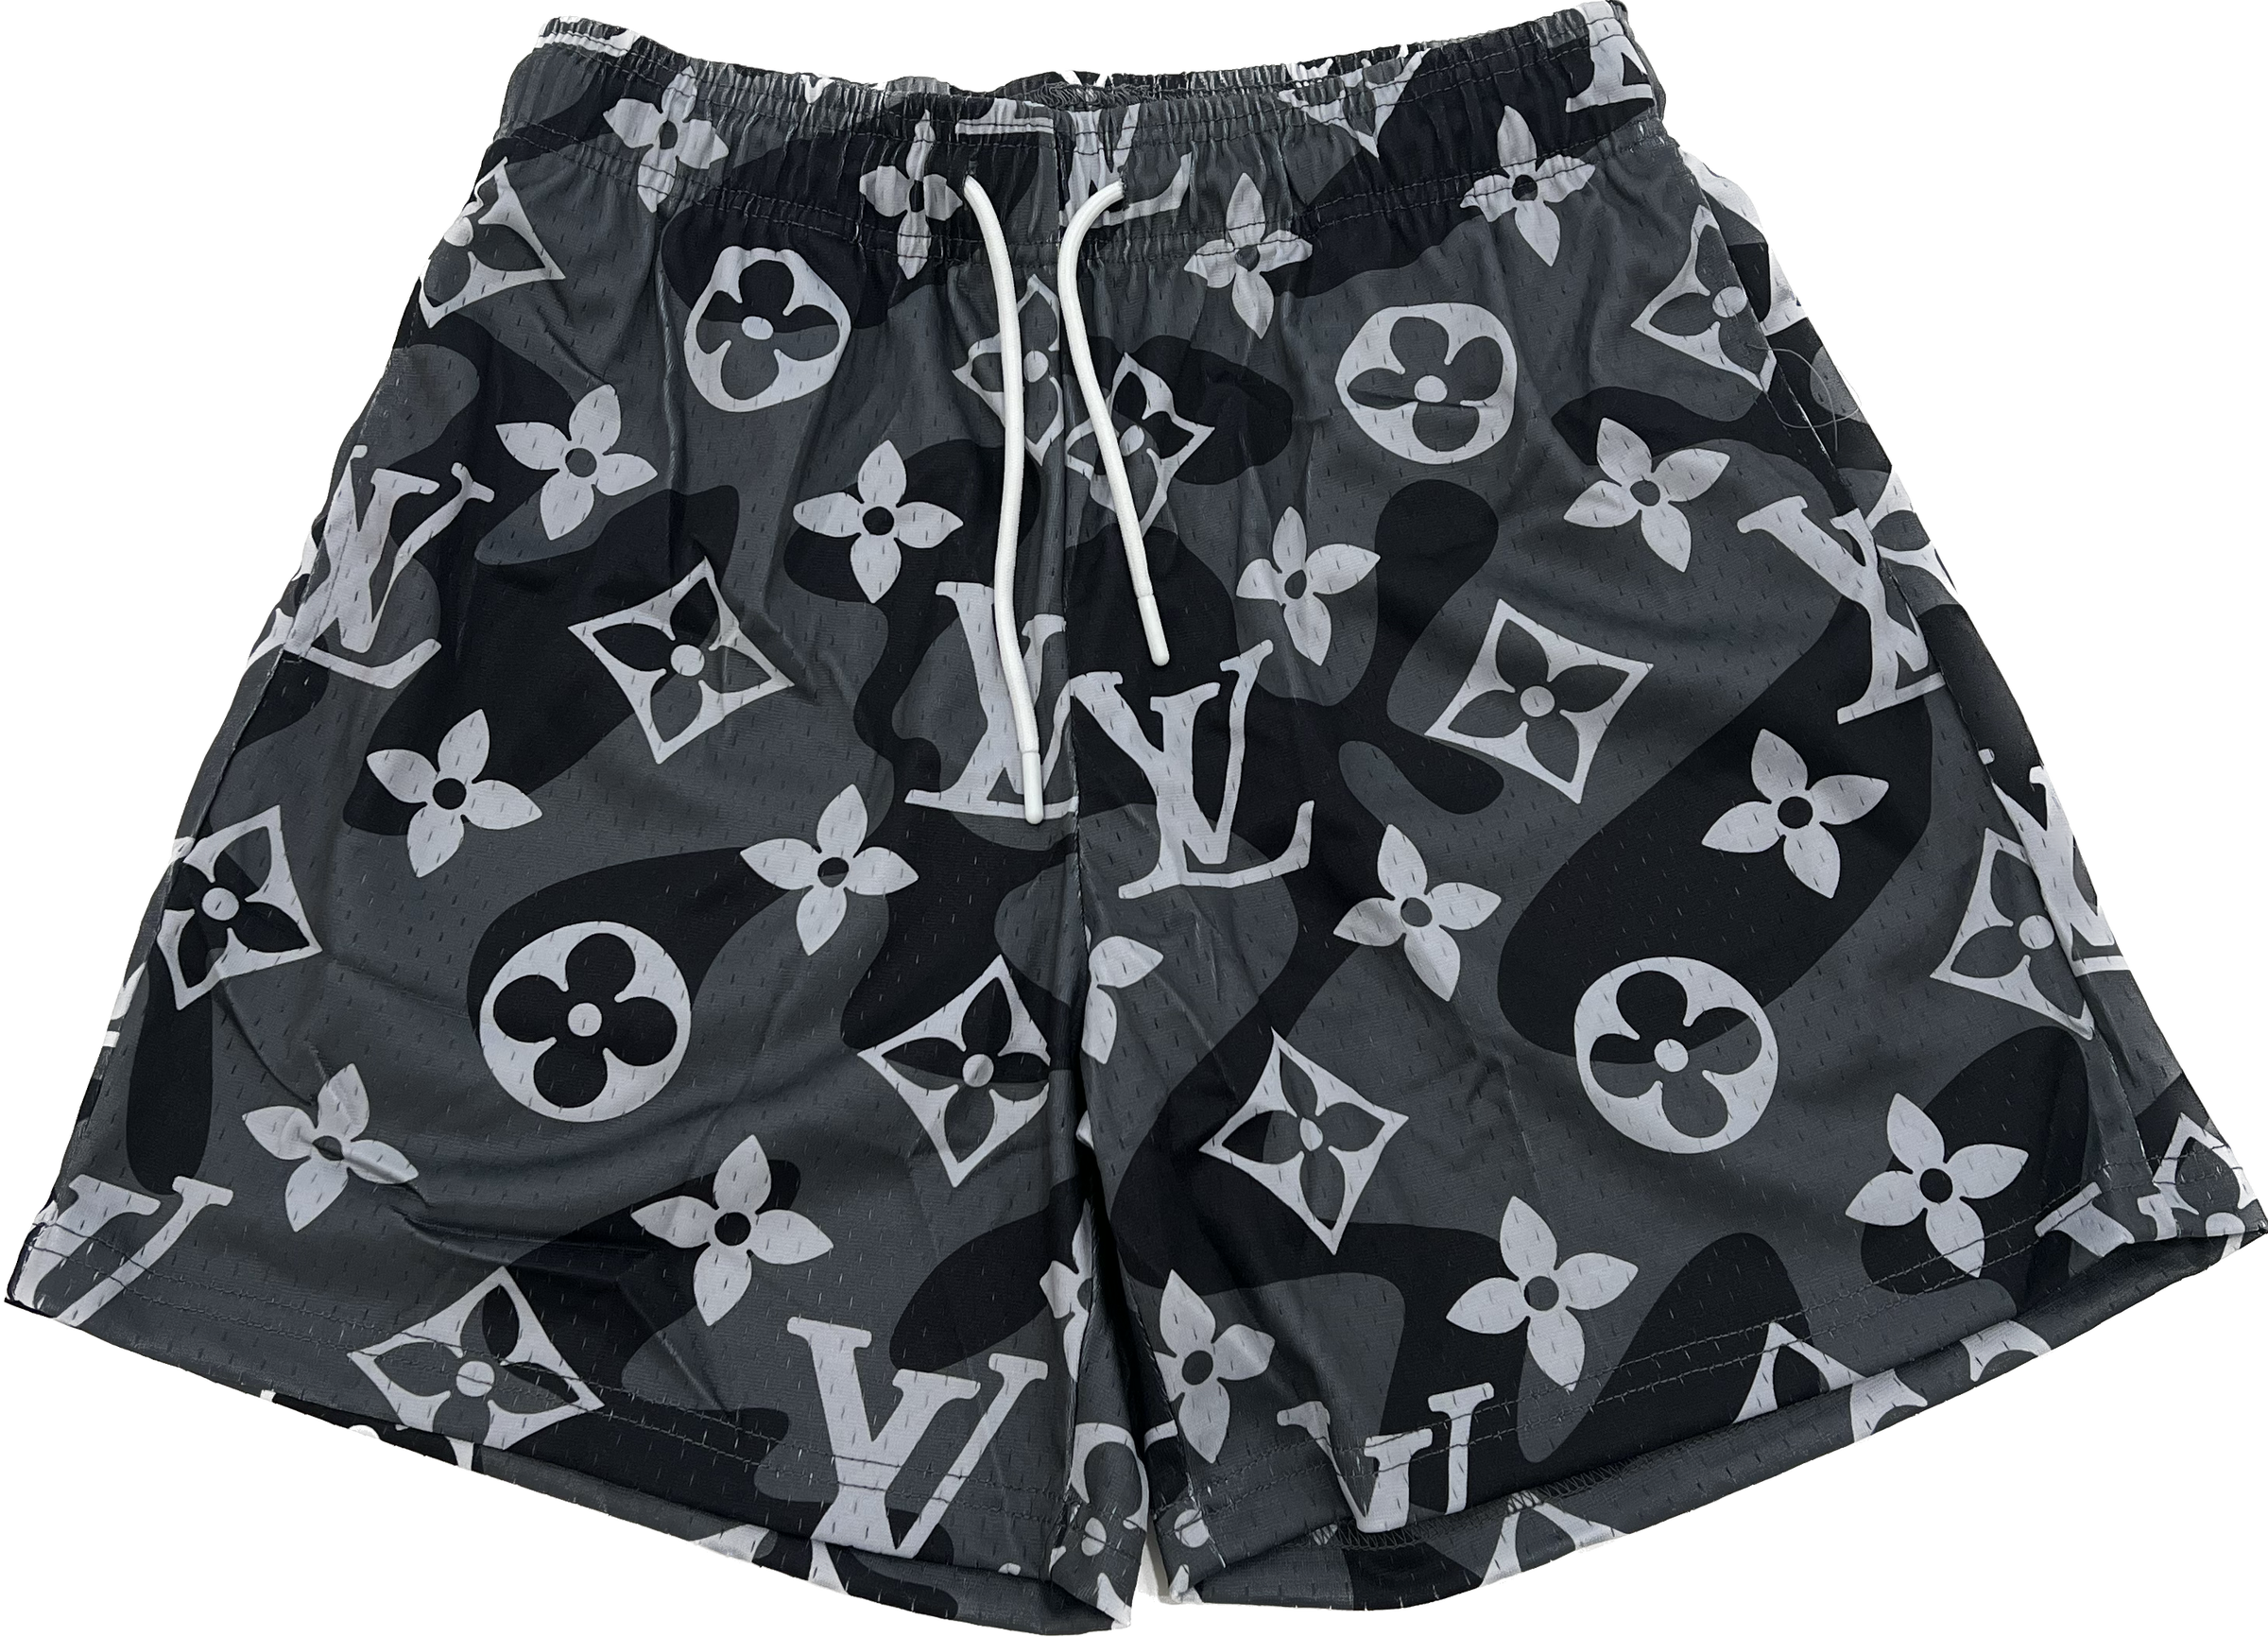 Bootleg Louis Vuitton Shorts Black/Grey